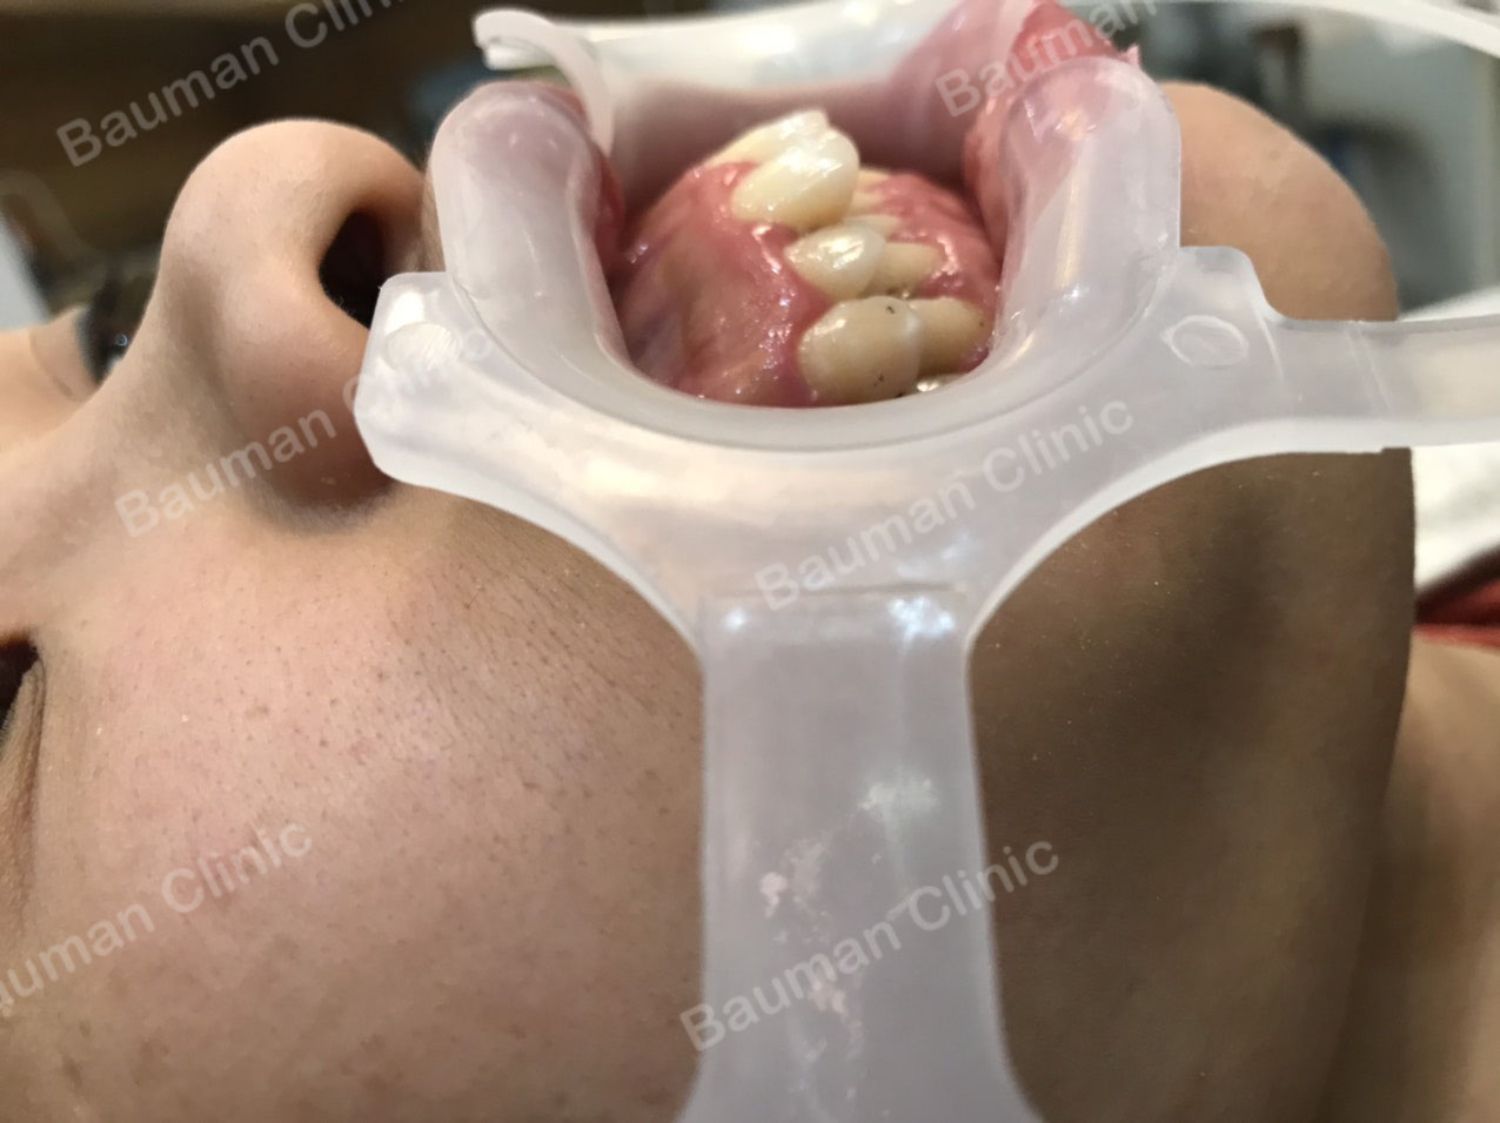 Ca niềng răng số 5094 - Nha khoa Bauman Clinic